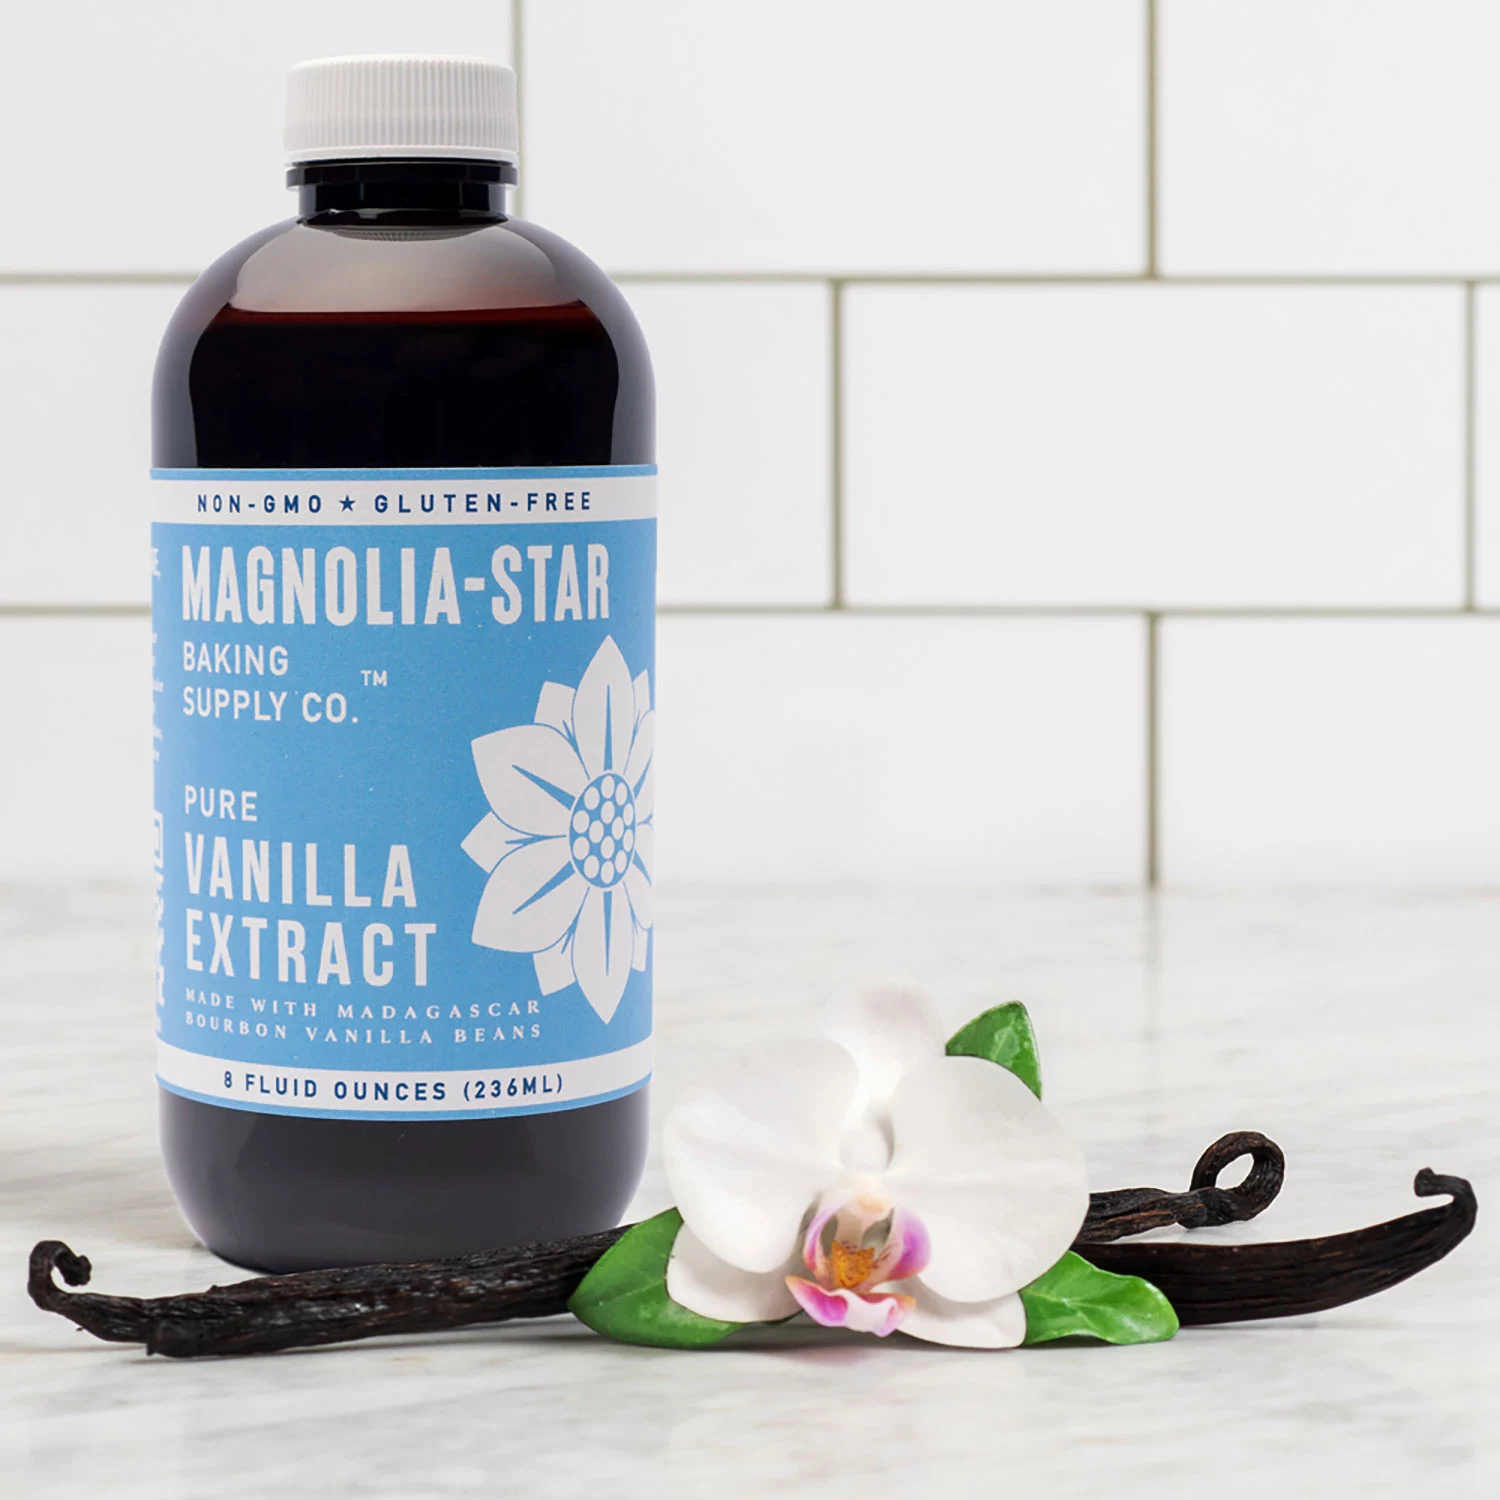 Magnolia-Star Pure Vanilla Extract